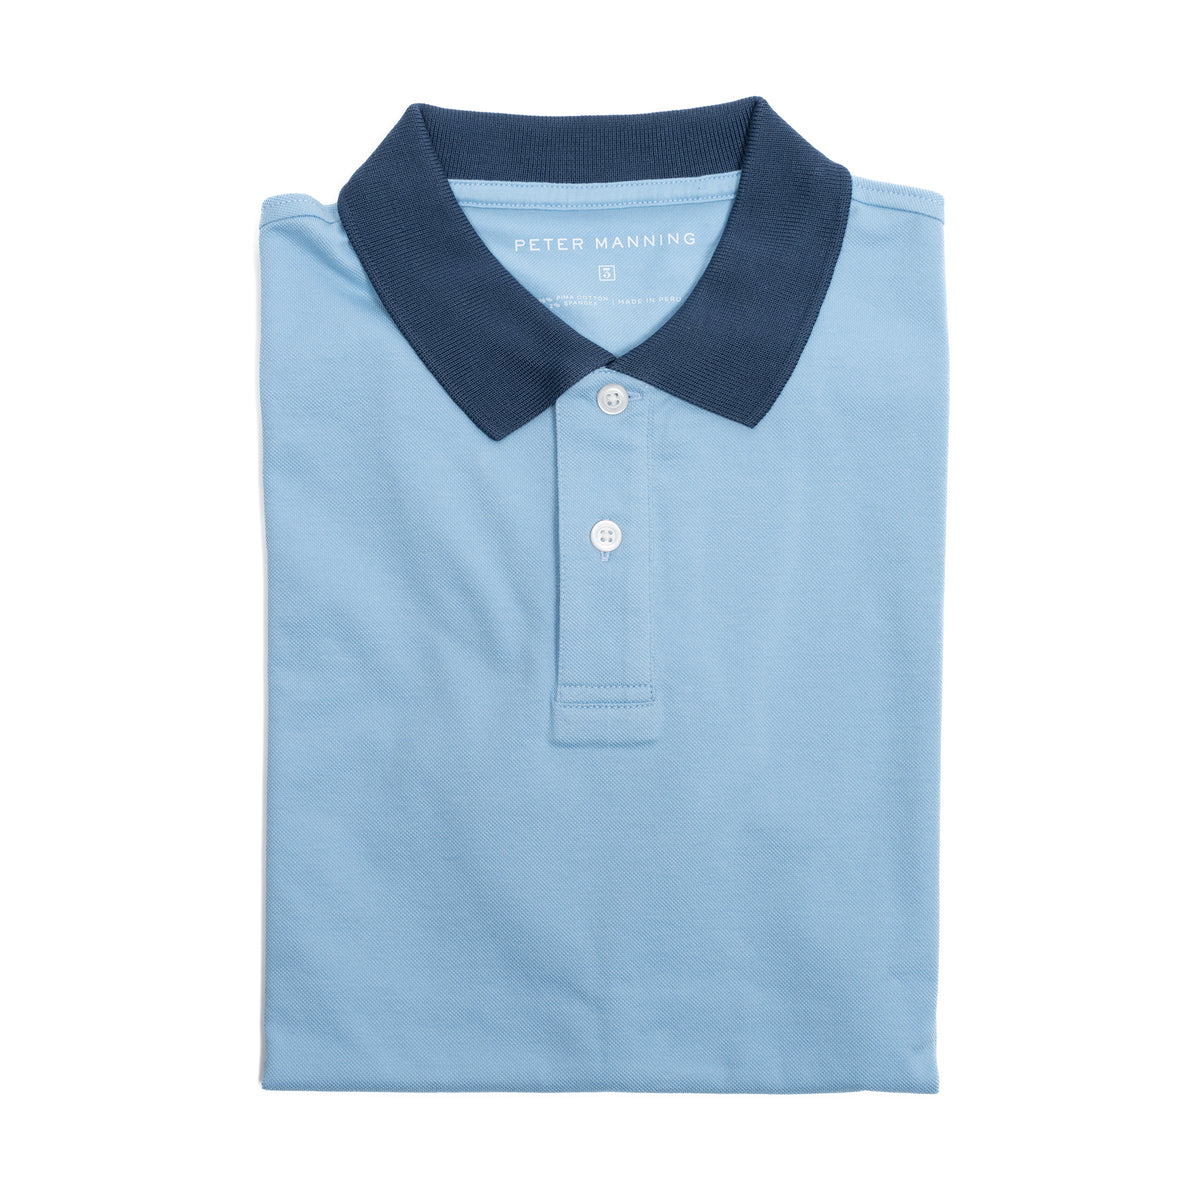 Pale Blue Tipped Polo Shirt for Shorter Men – Peter Manning New York